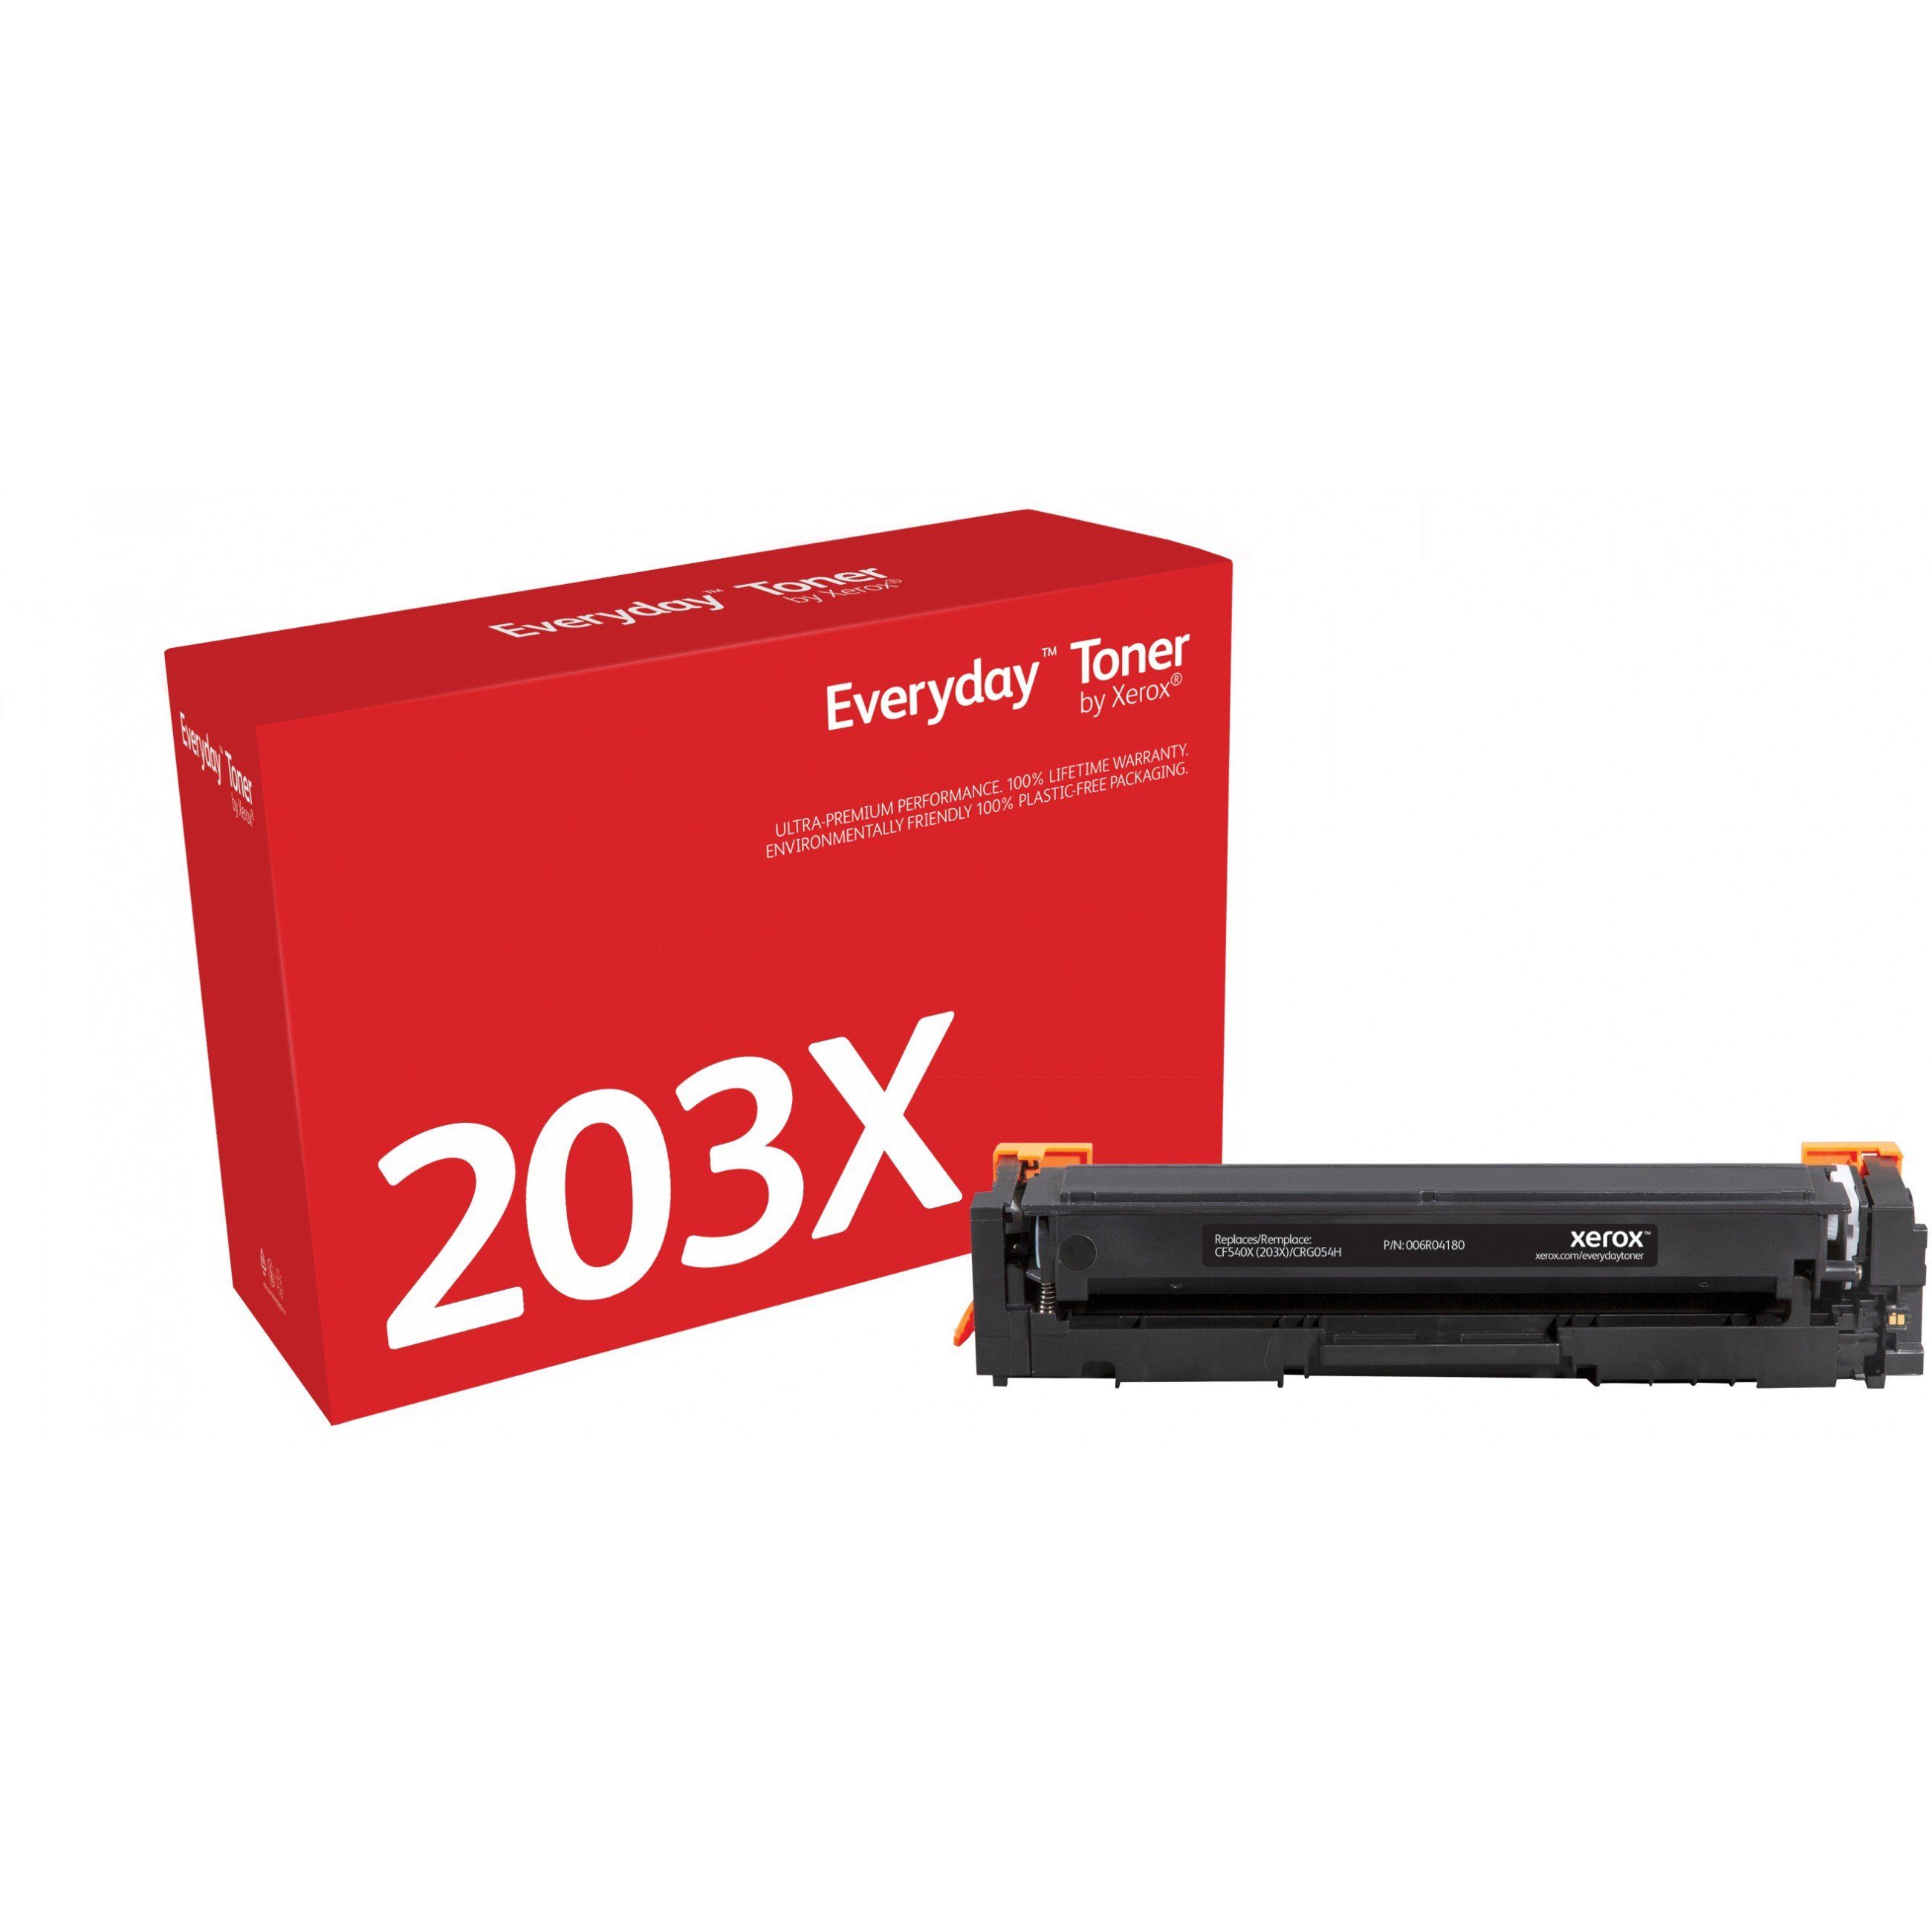 XEROX - Everyday and Toner Yield - 203X Canon High HP ersetzt Schwarz Xerox Tonerkartusche